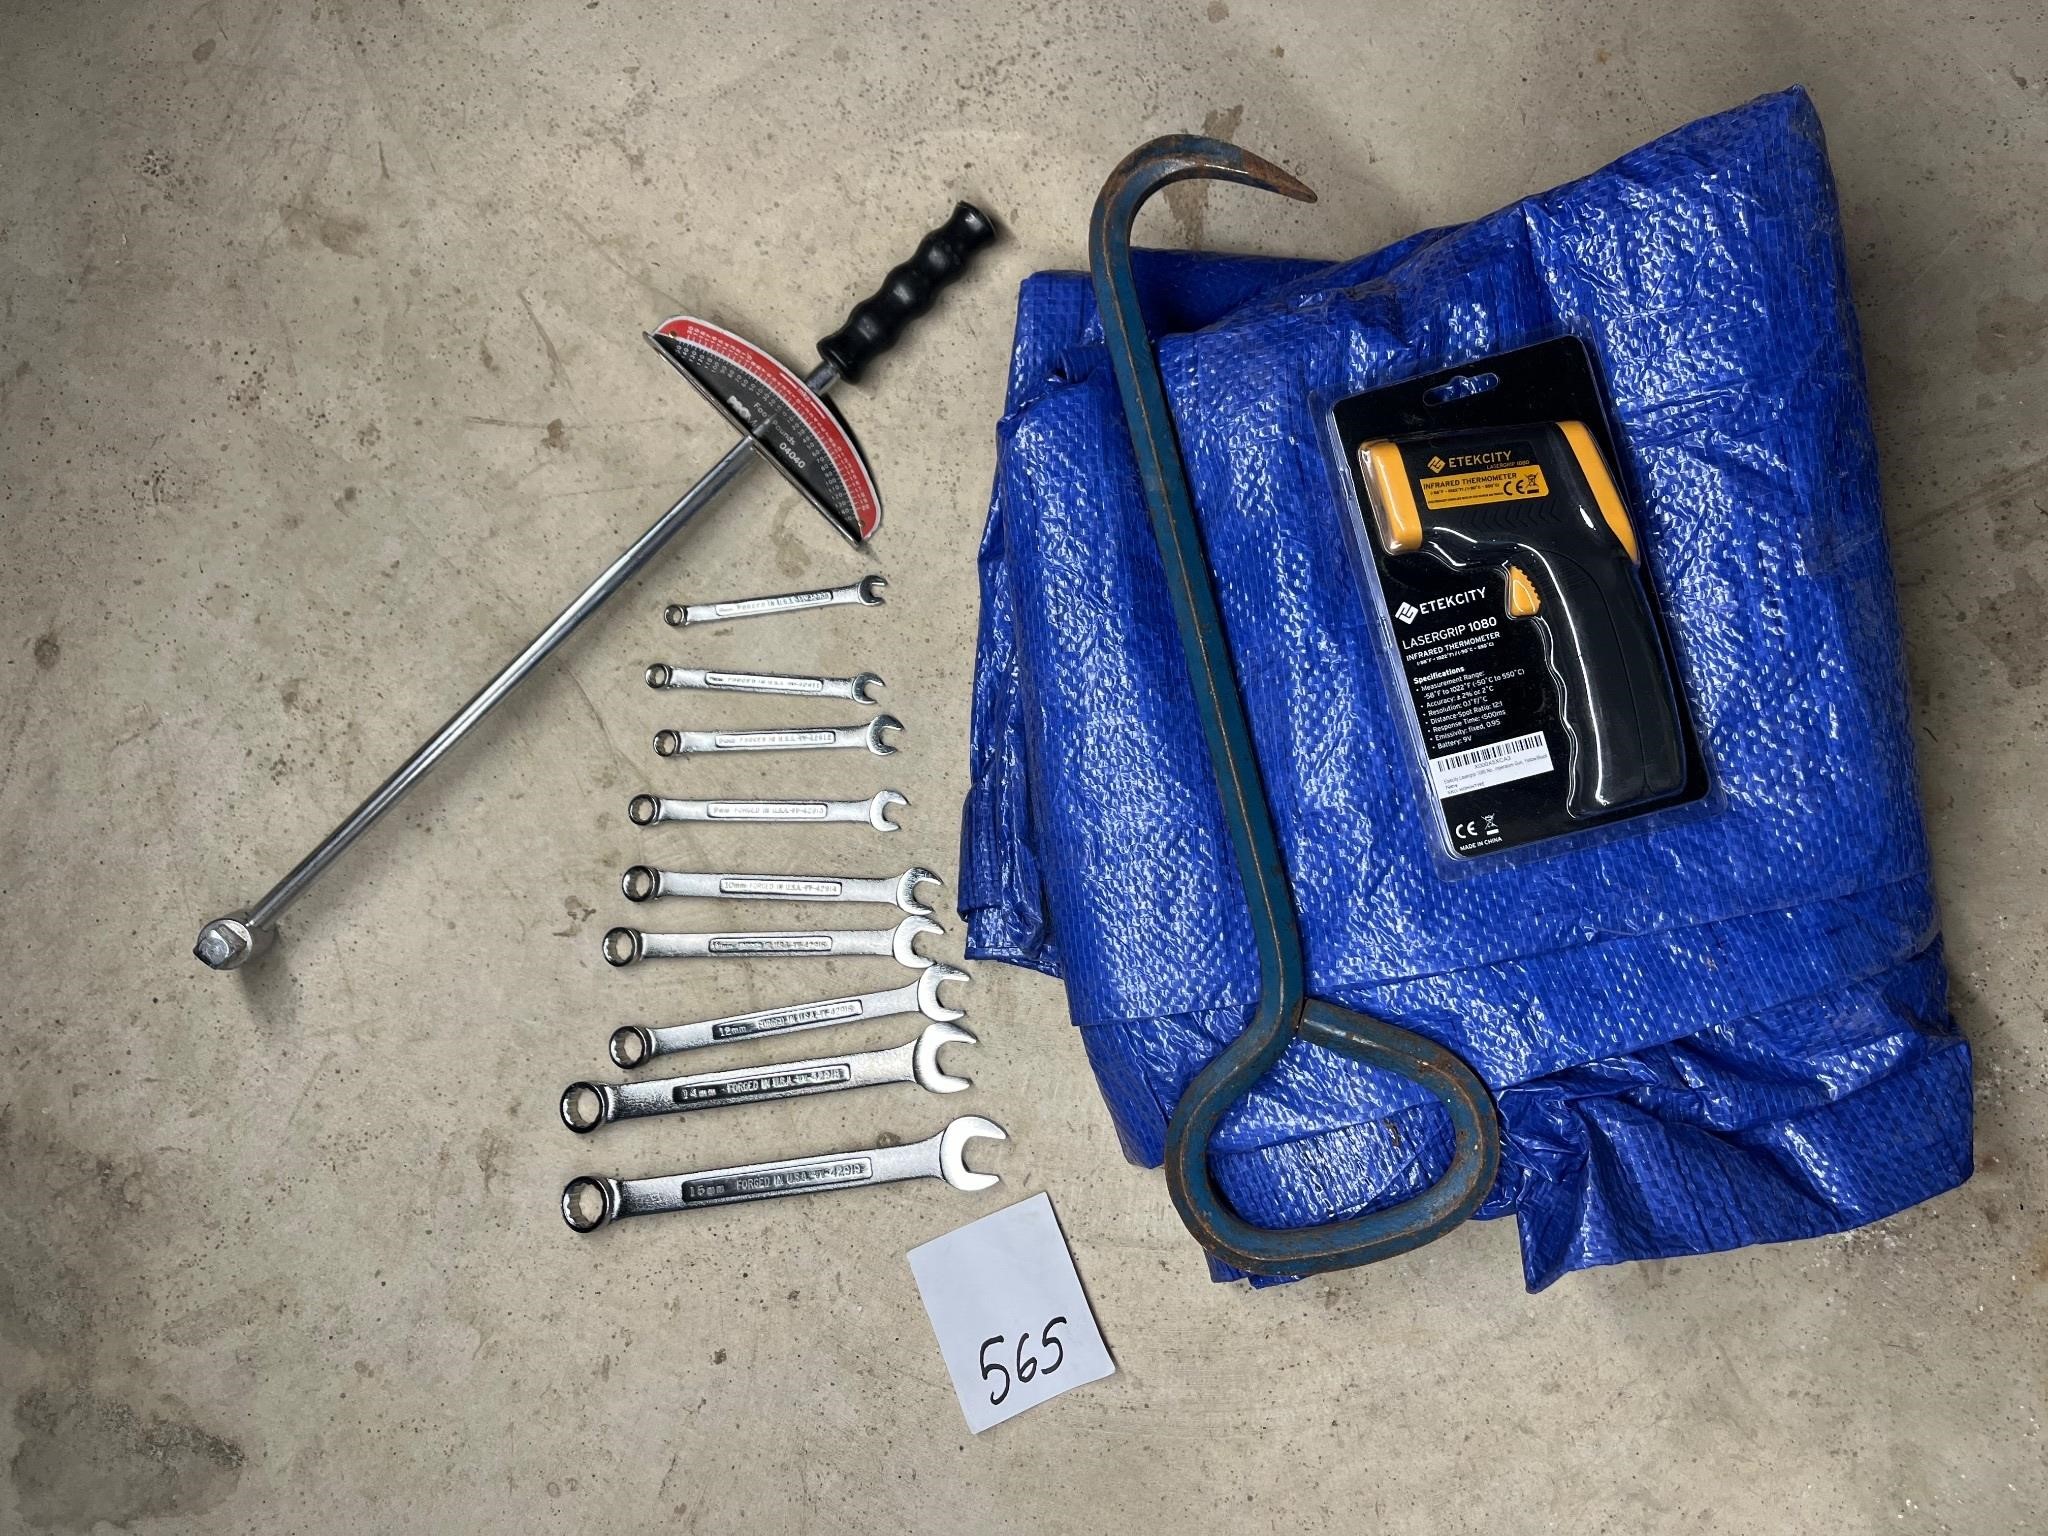 Tools, thermometer, tarp